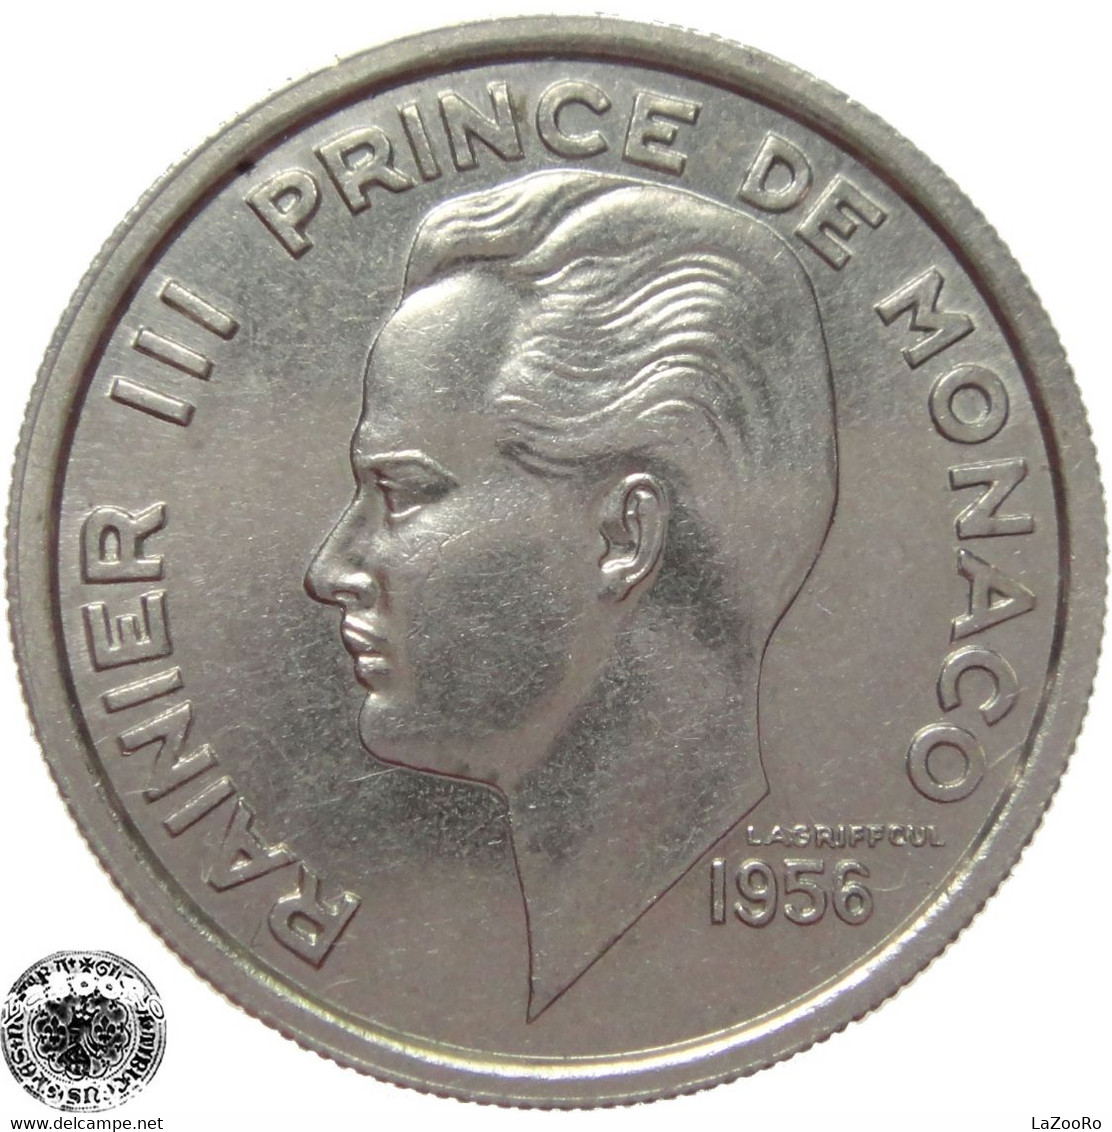 LaZooRo: Monaco 100 Francs 1956 UNC - 1949-1956 Oude Frank